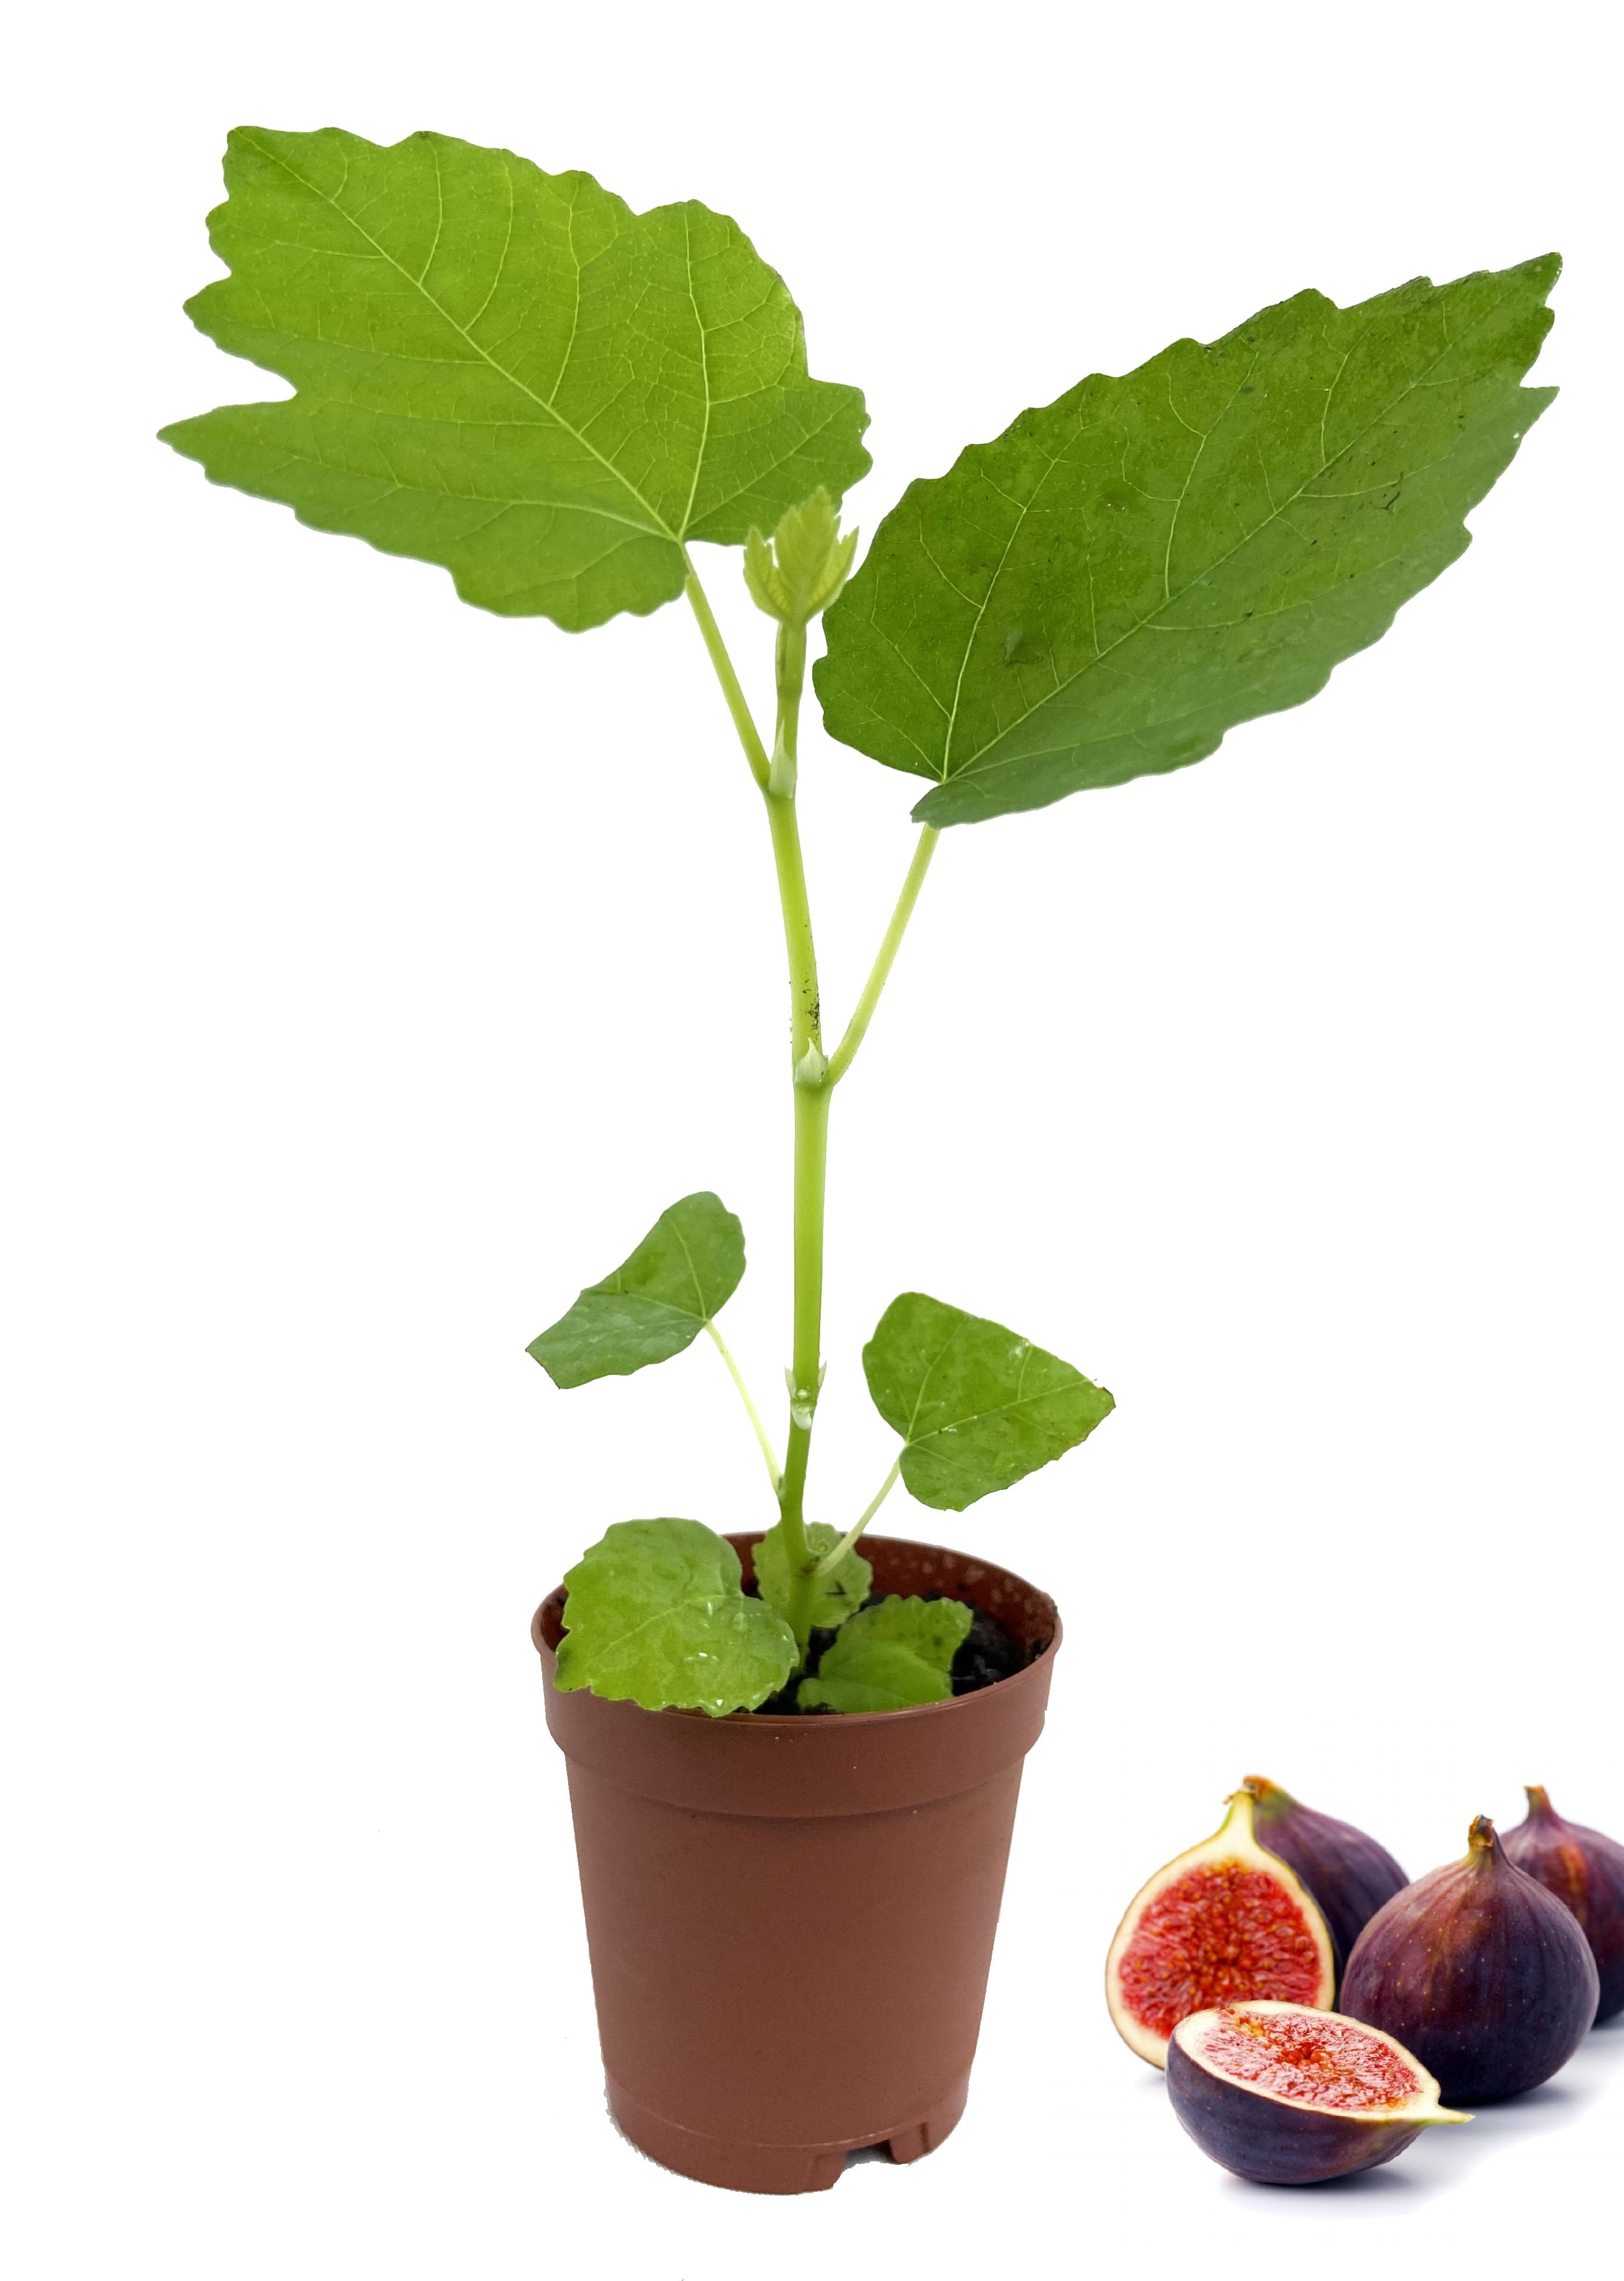 Lattarula Italian Tree - Live Plant in a 2 inch Pot - Ficus Carica - Edible Fruit Tree The Patio and Garden Walmart.com